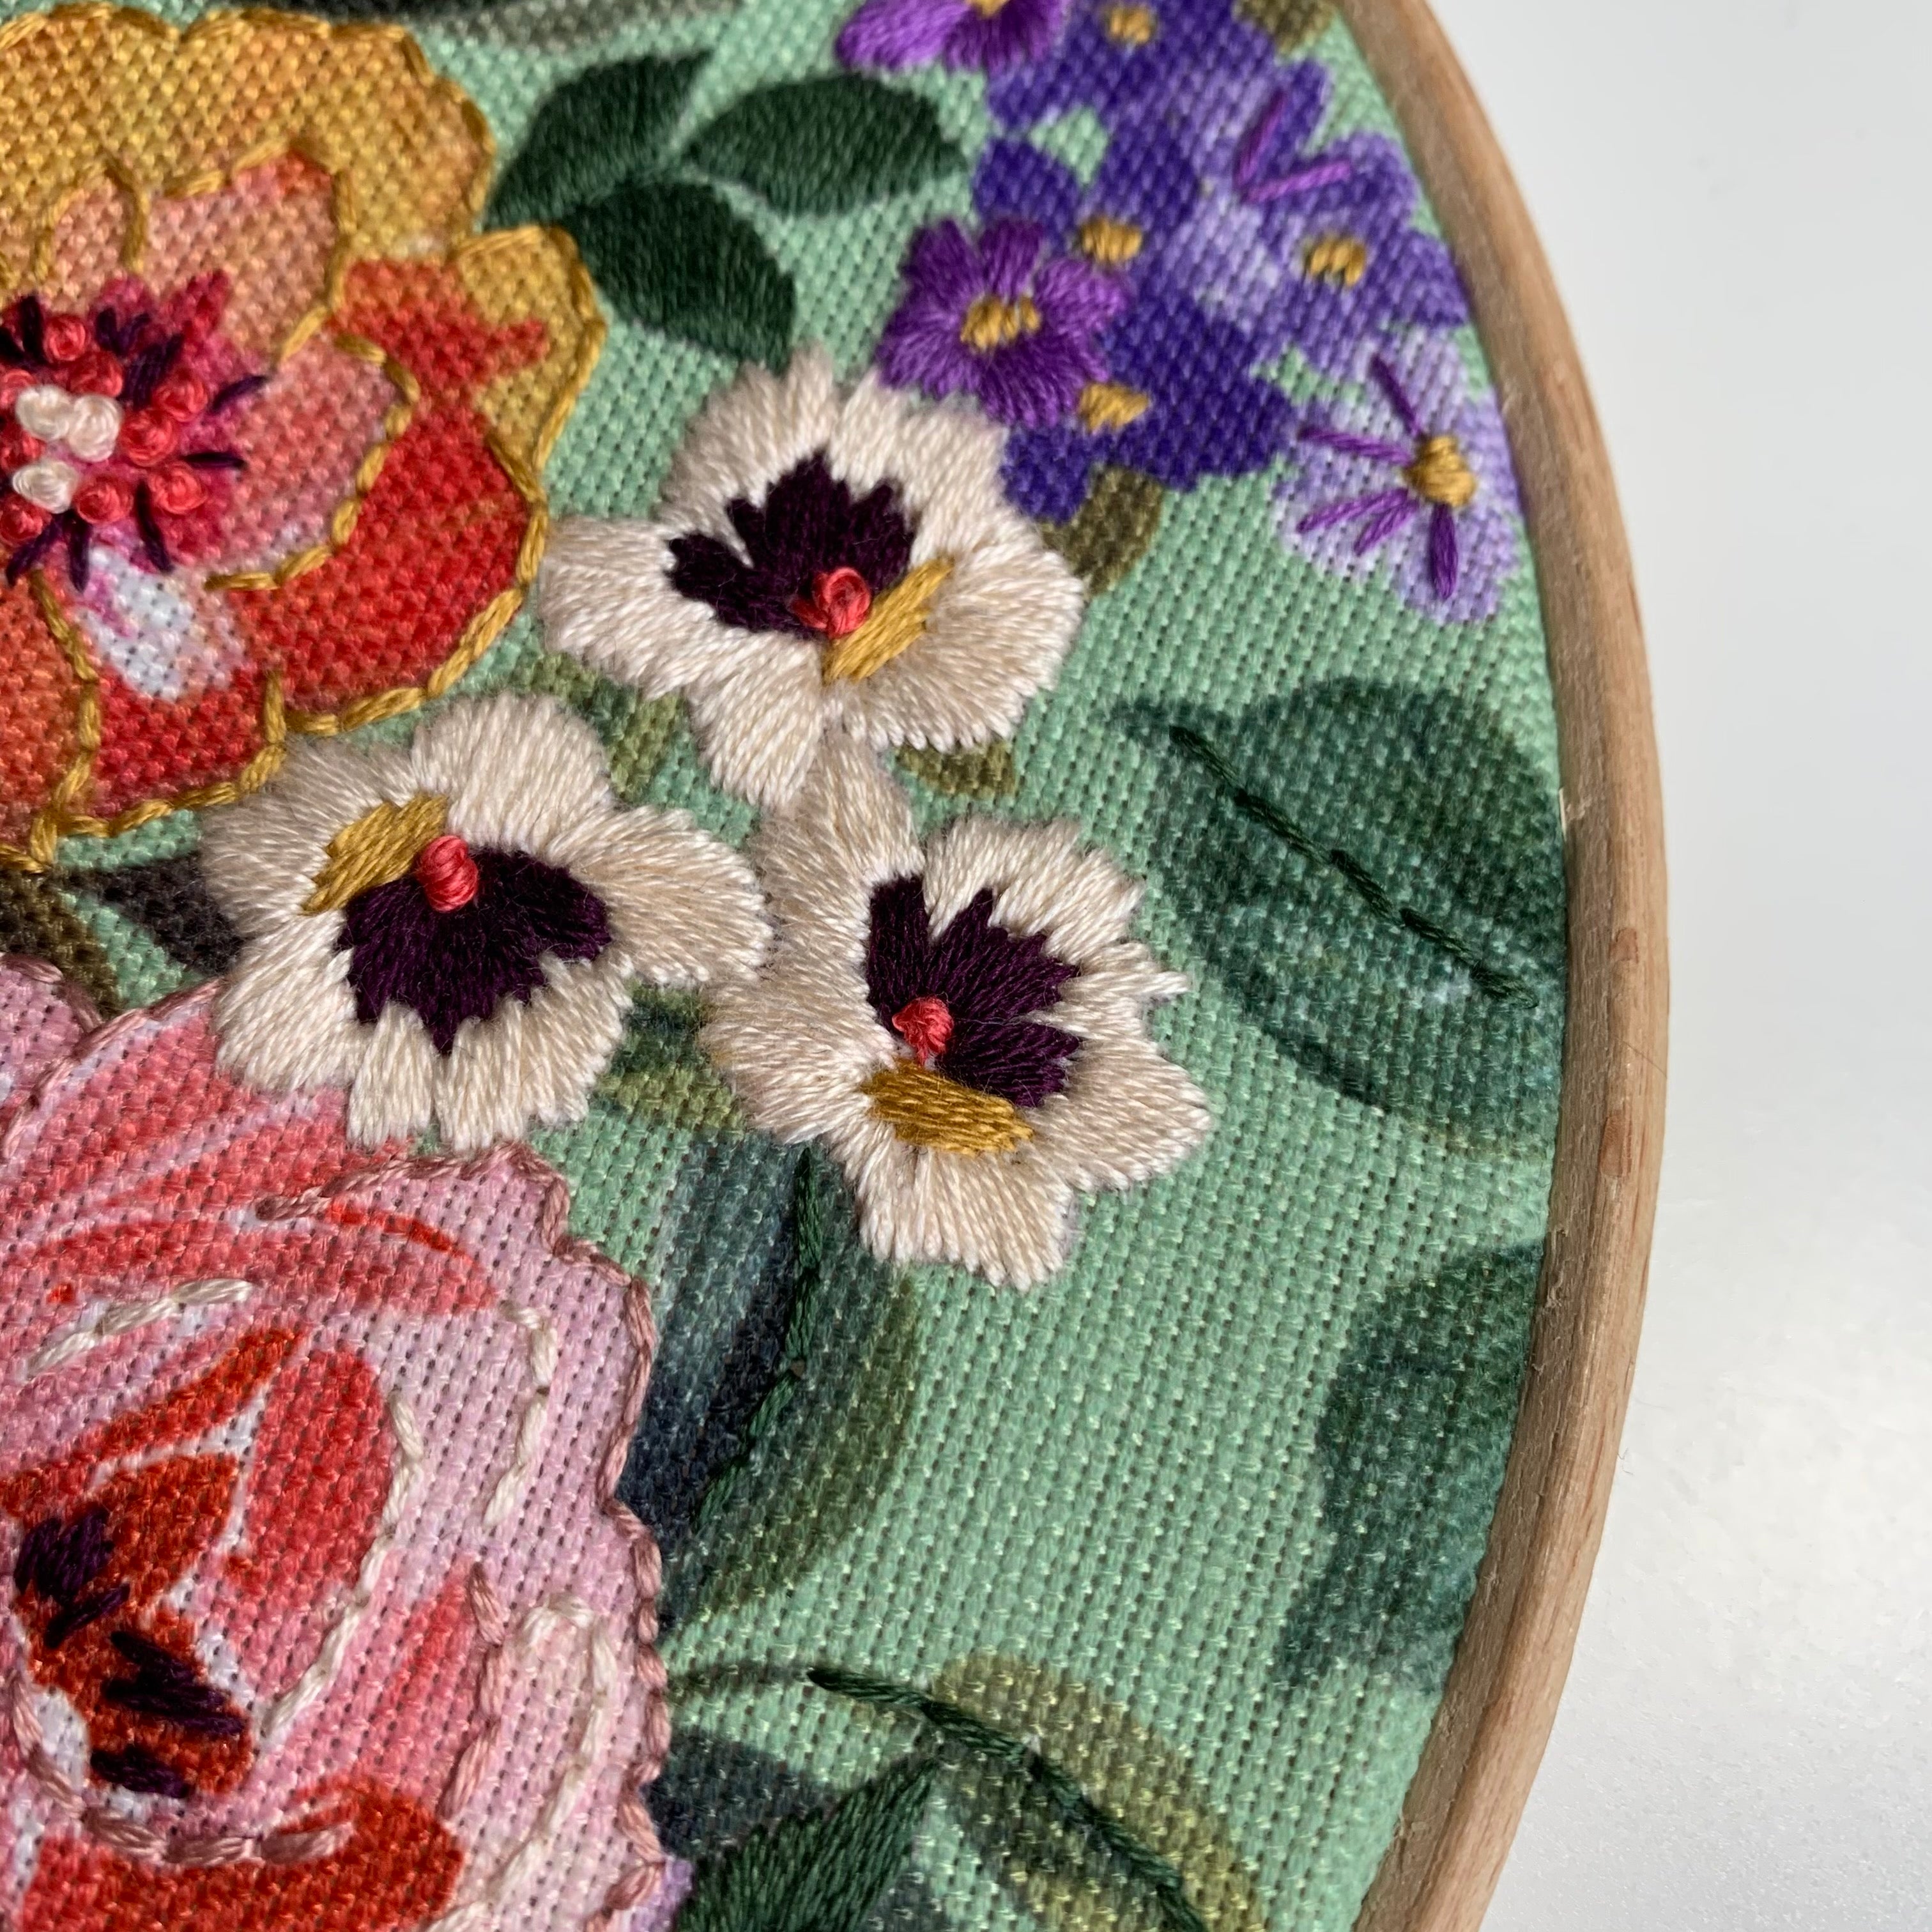 Vintage Rose embroidery kit